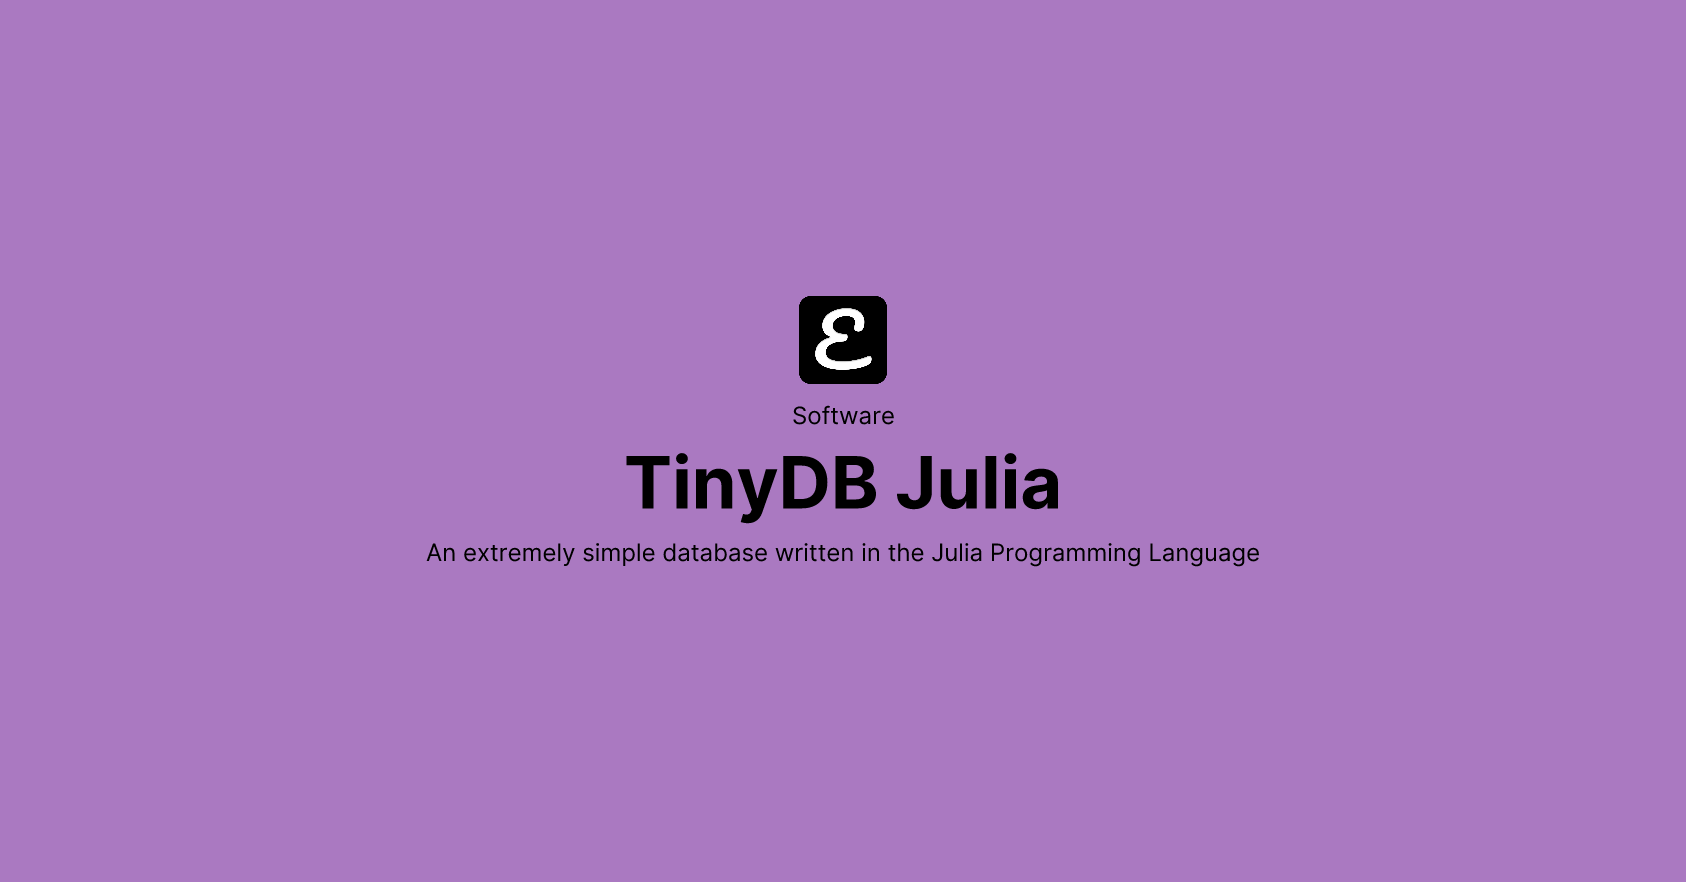 TinyDB Julia by Eric David Smith